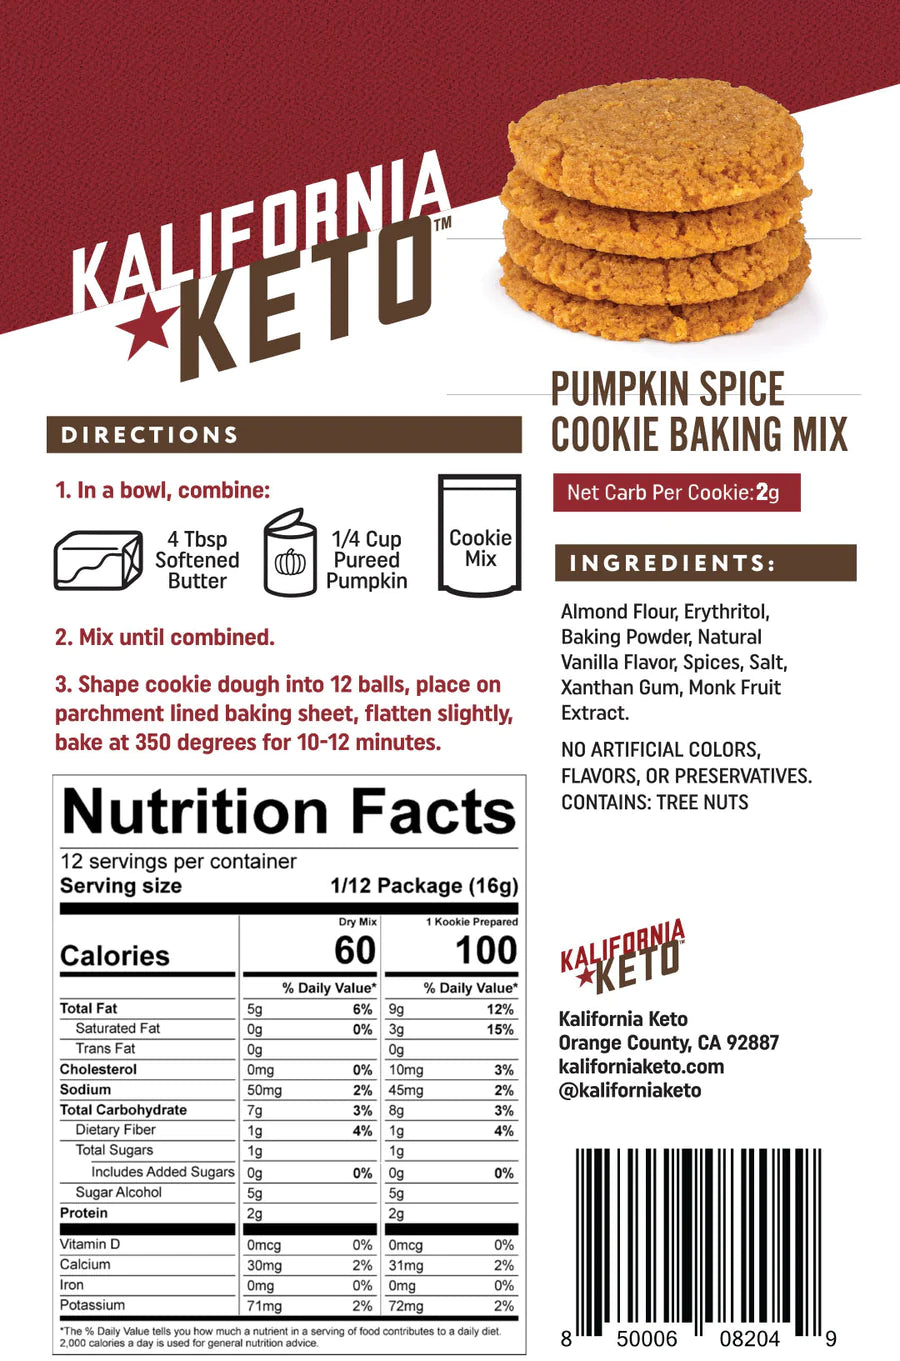 Kalifornia Keto - Pumpkin Spice Kookie Baking Mix (6.8 oz)